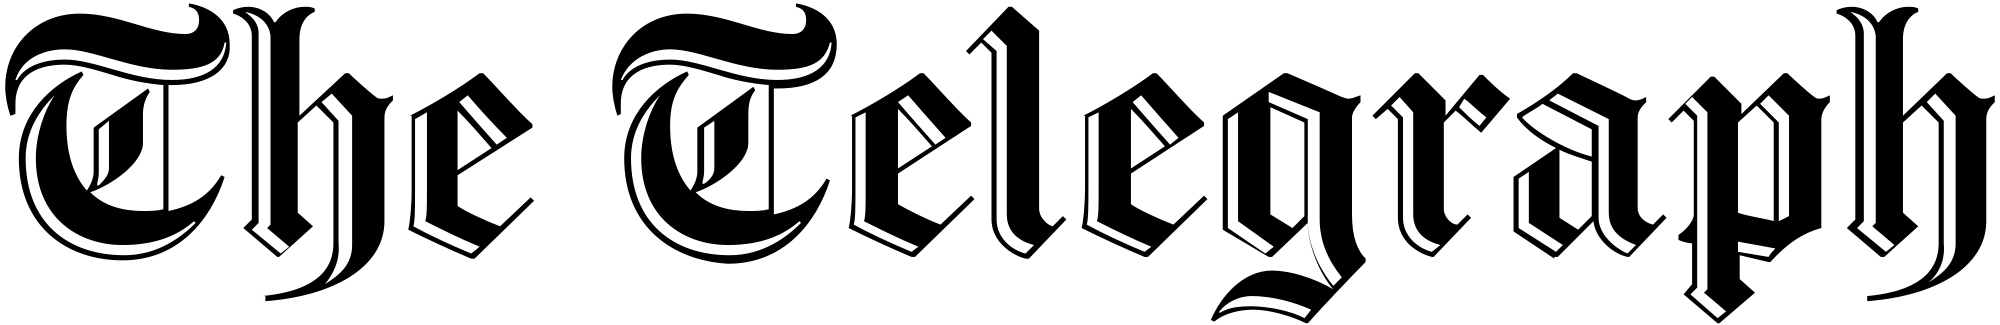 The Telegraph logo.